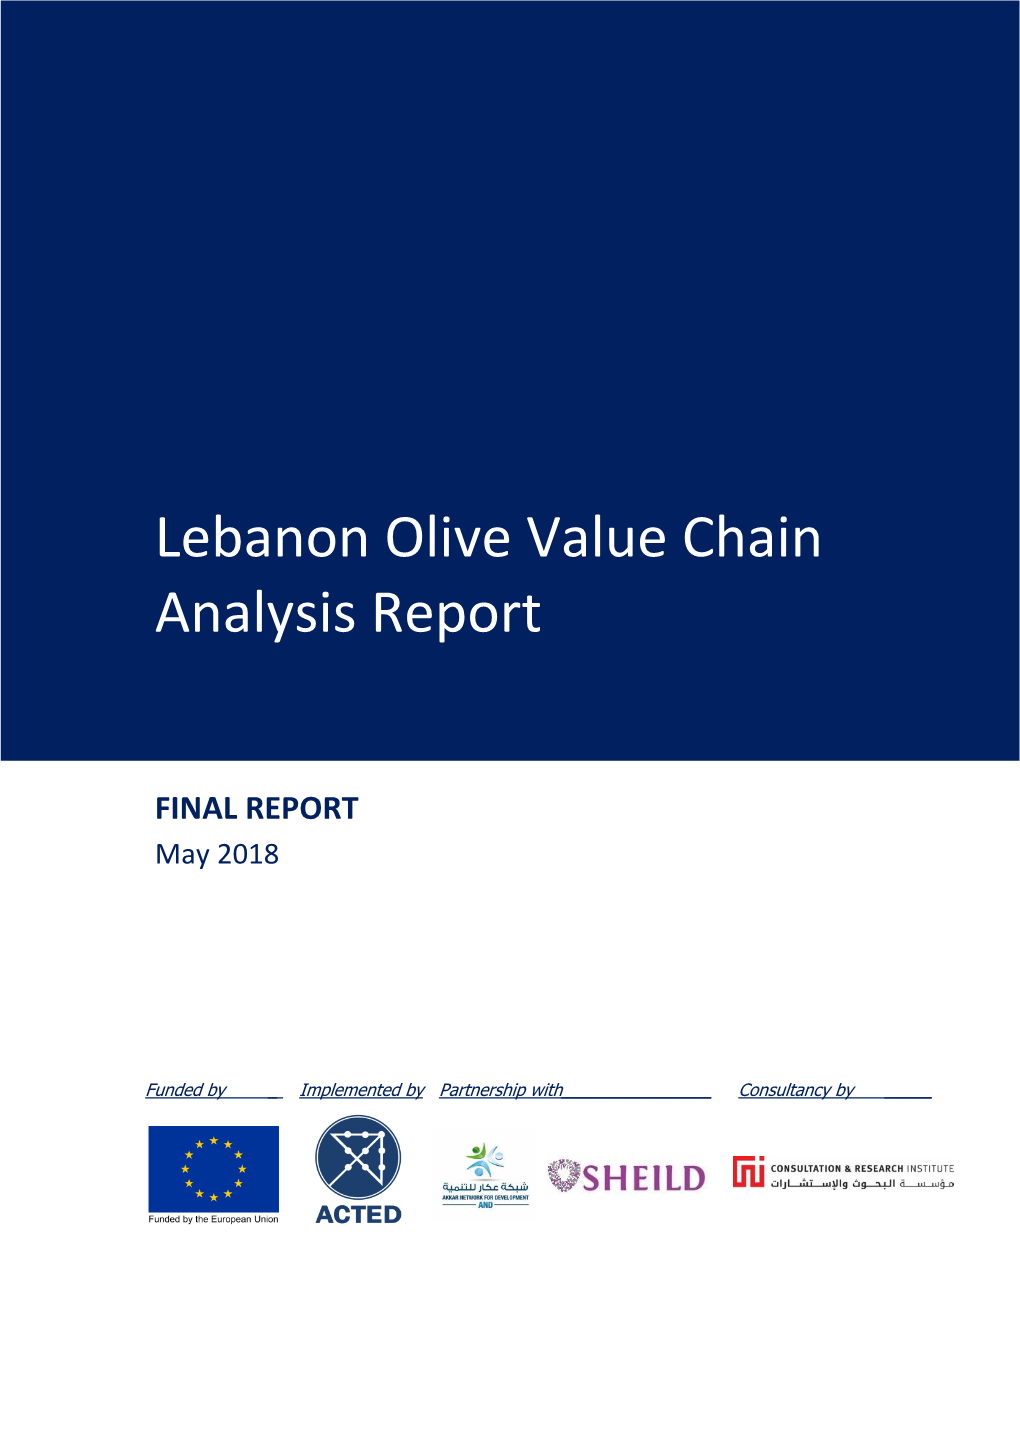 Lebanon Olive Value Chain Analysis Report